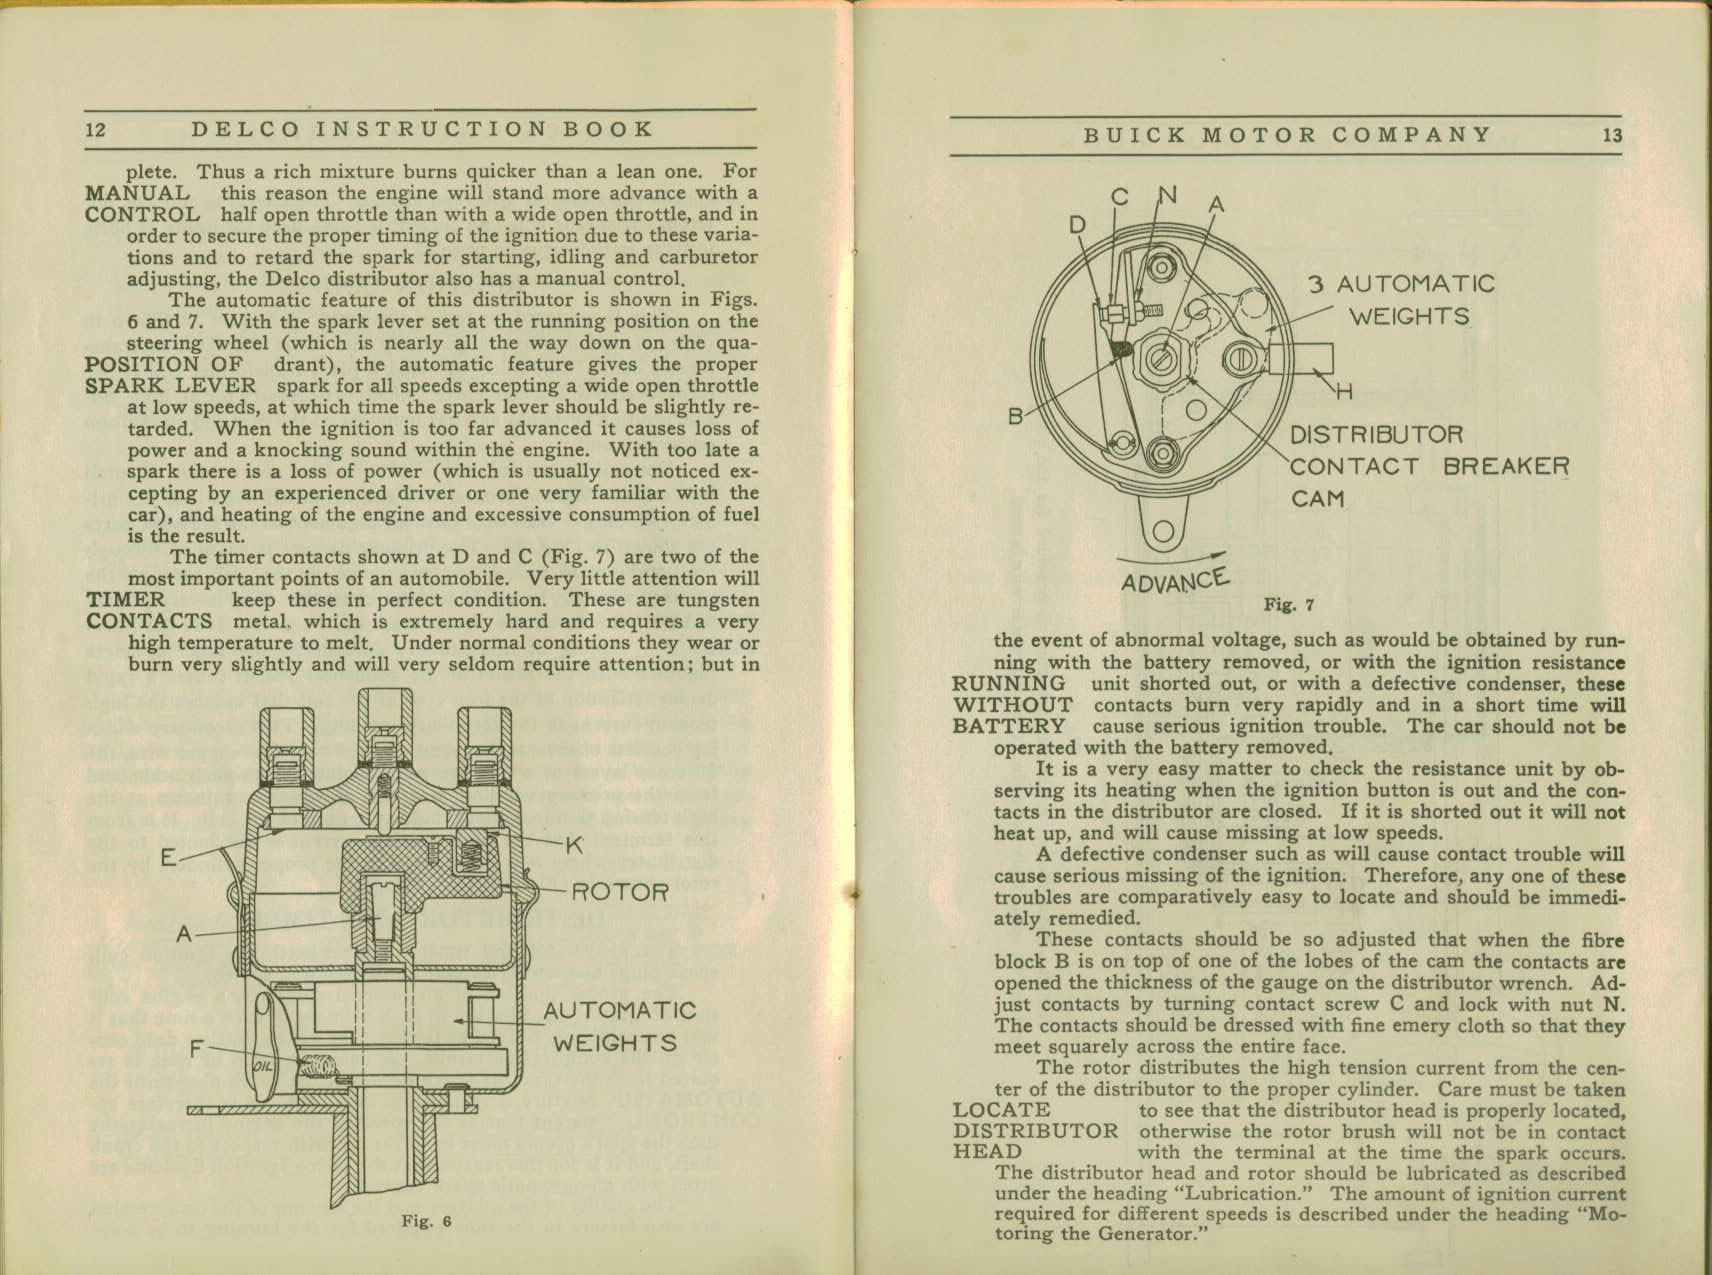 1916 Buick Delco Instruction Book-12-13